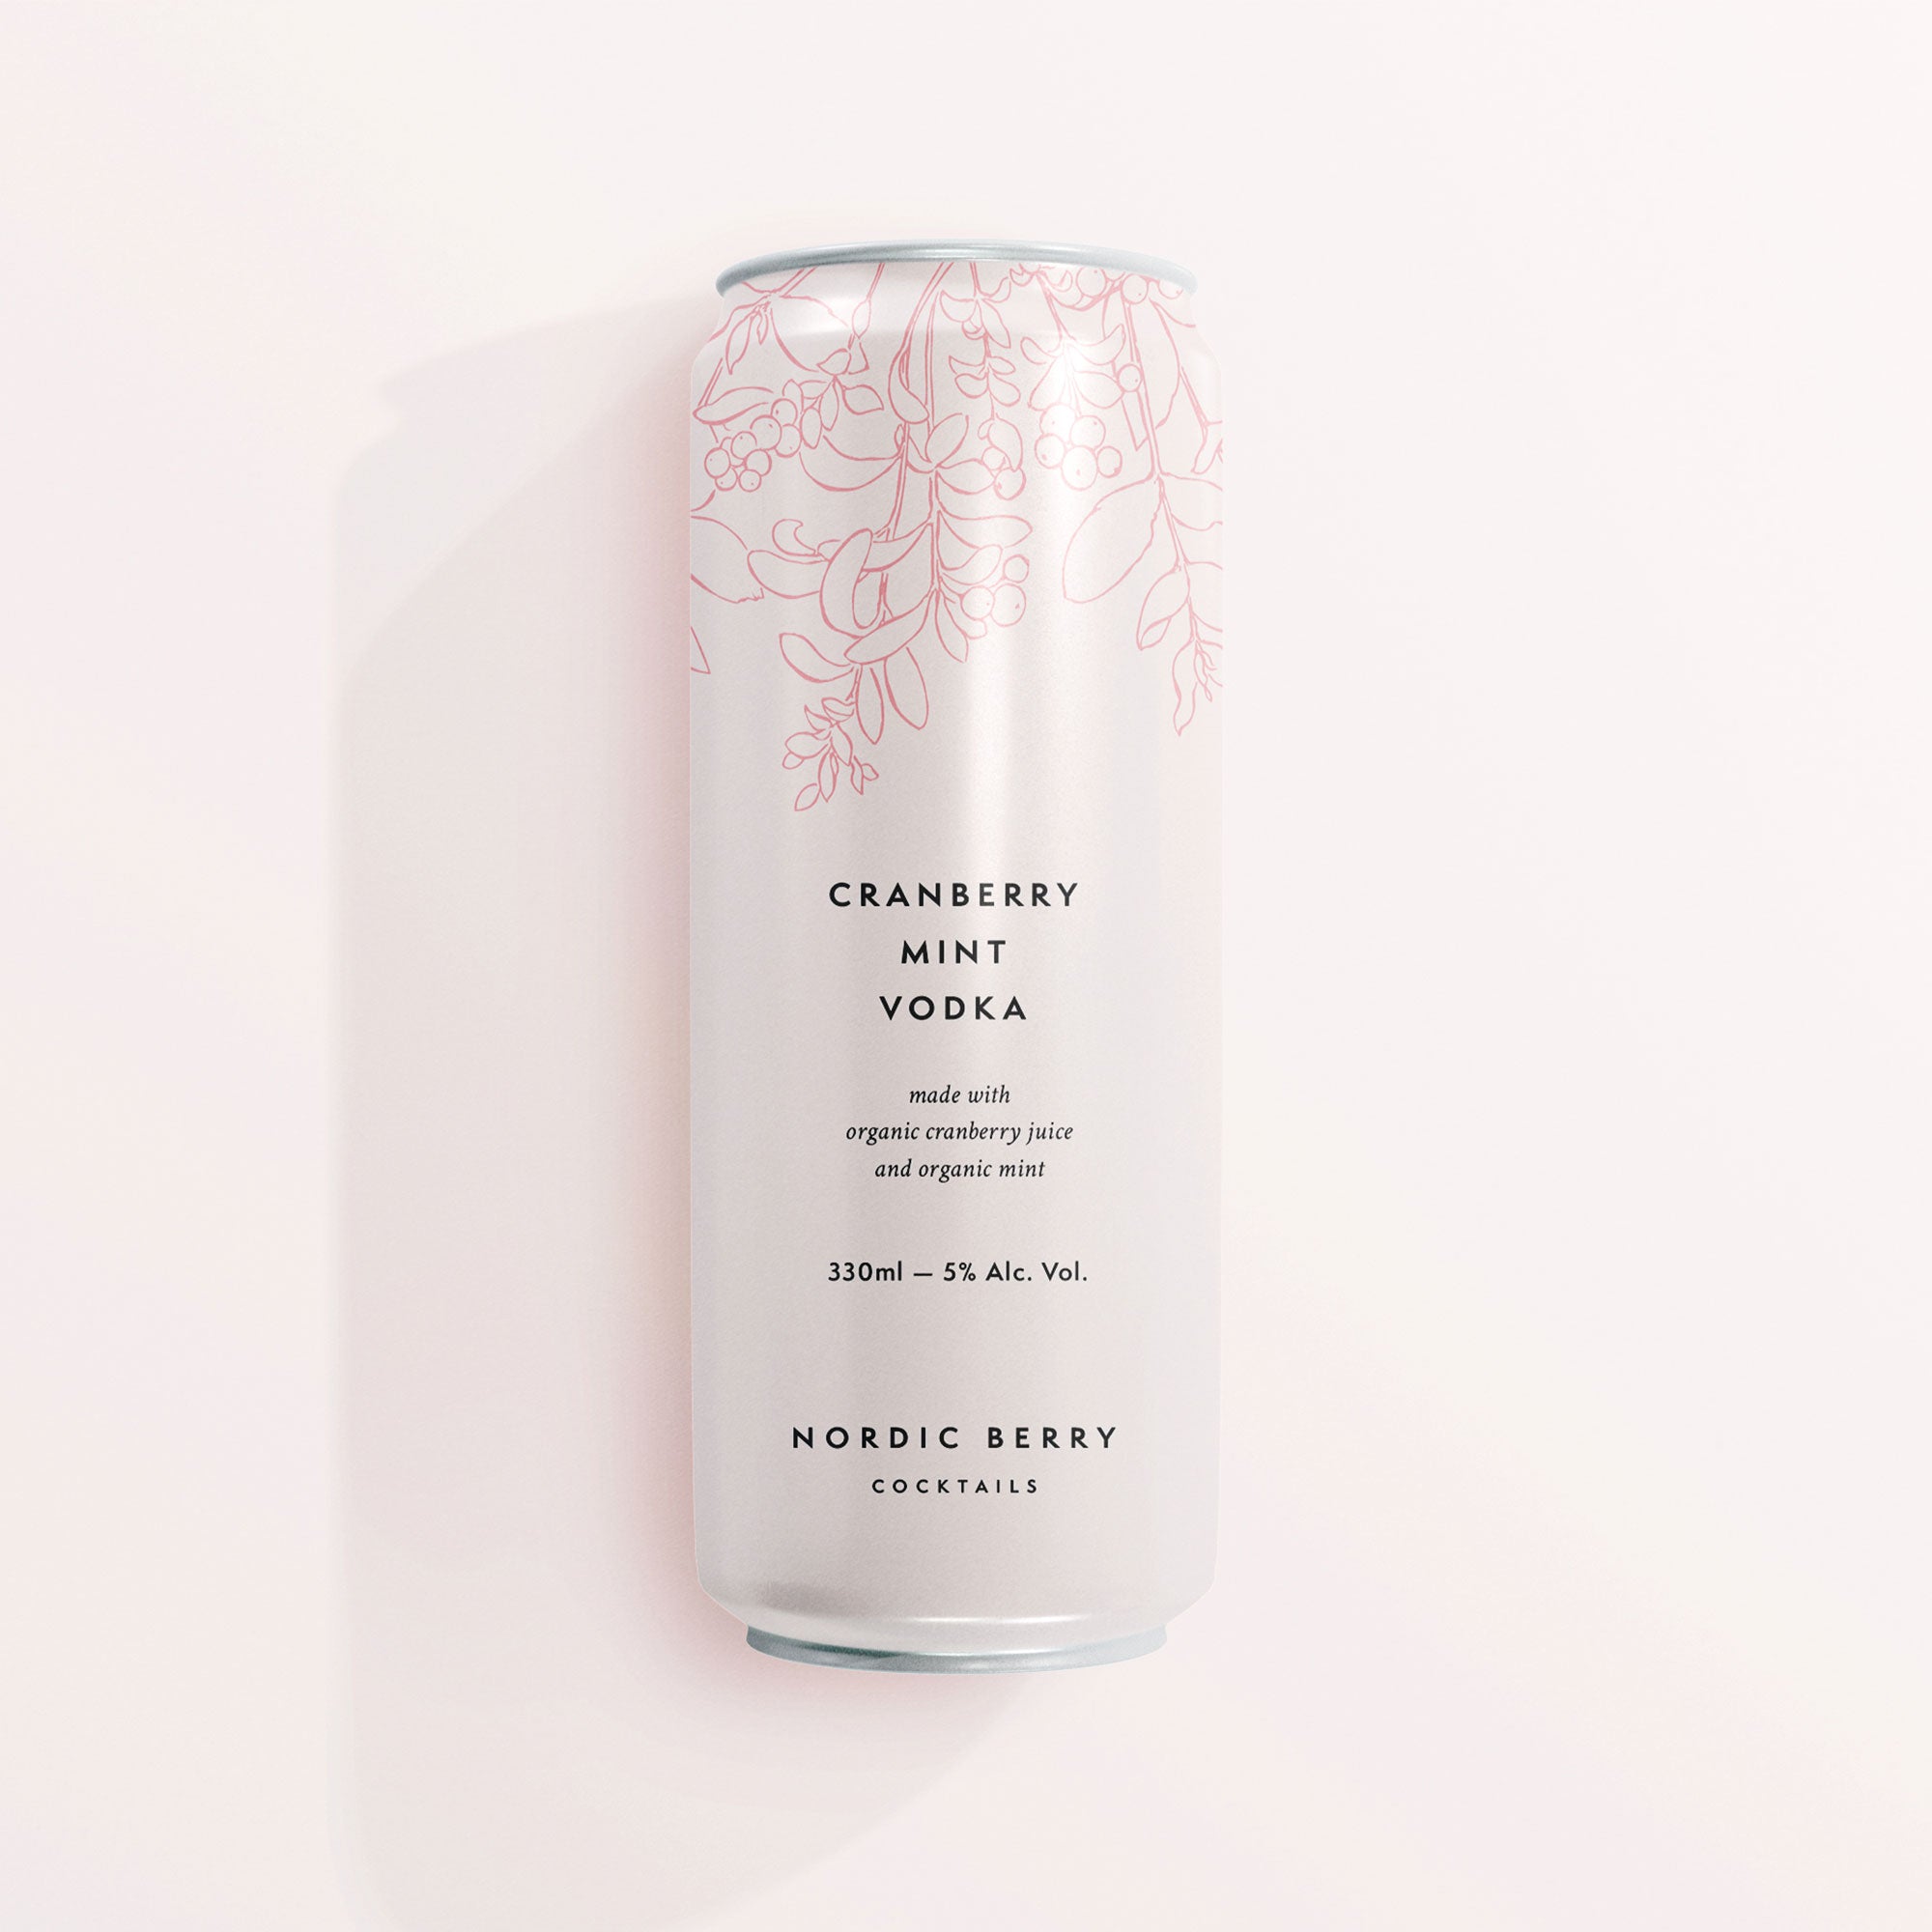 karolina krol studio nordic berry cocktails minimalist brand packaging design organic cranberry mint vodka